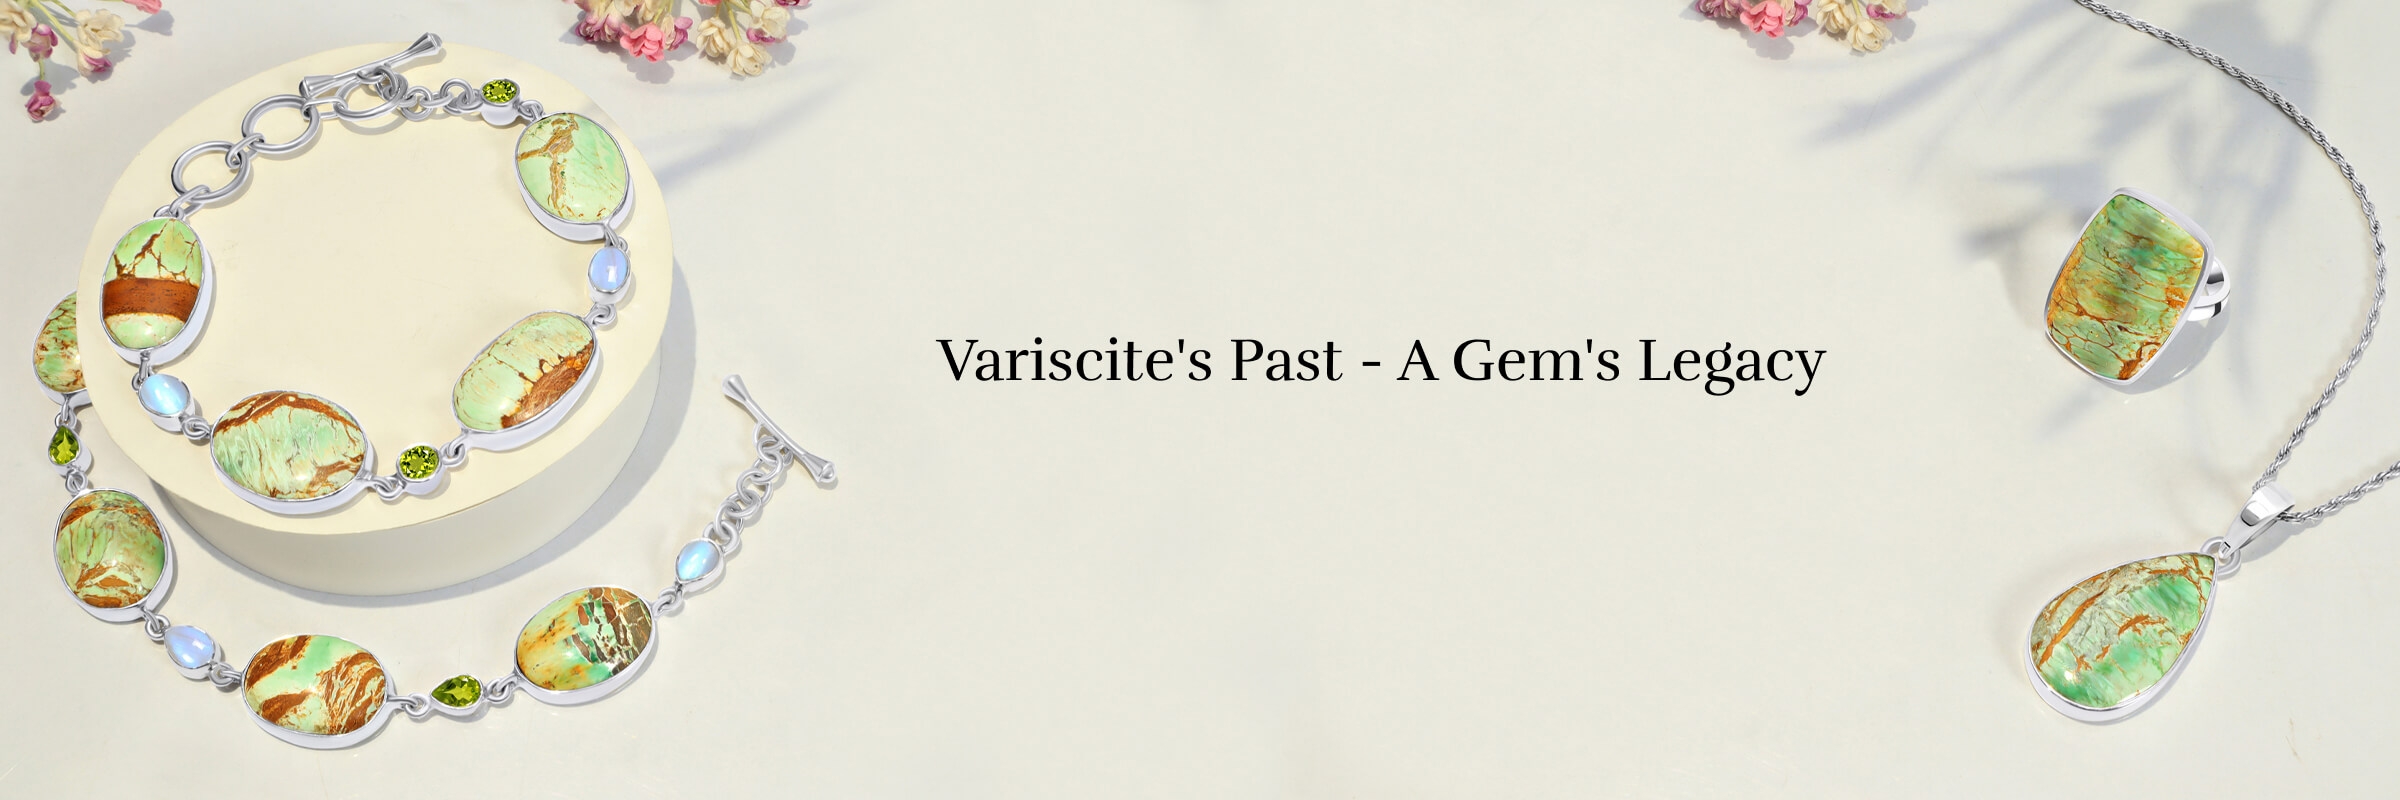 History of Variscite Gem